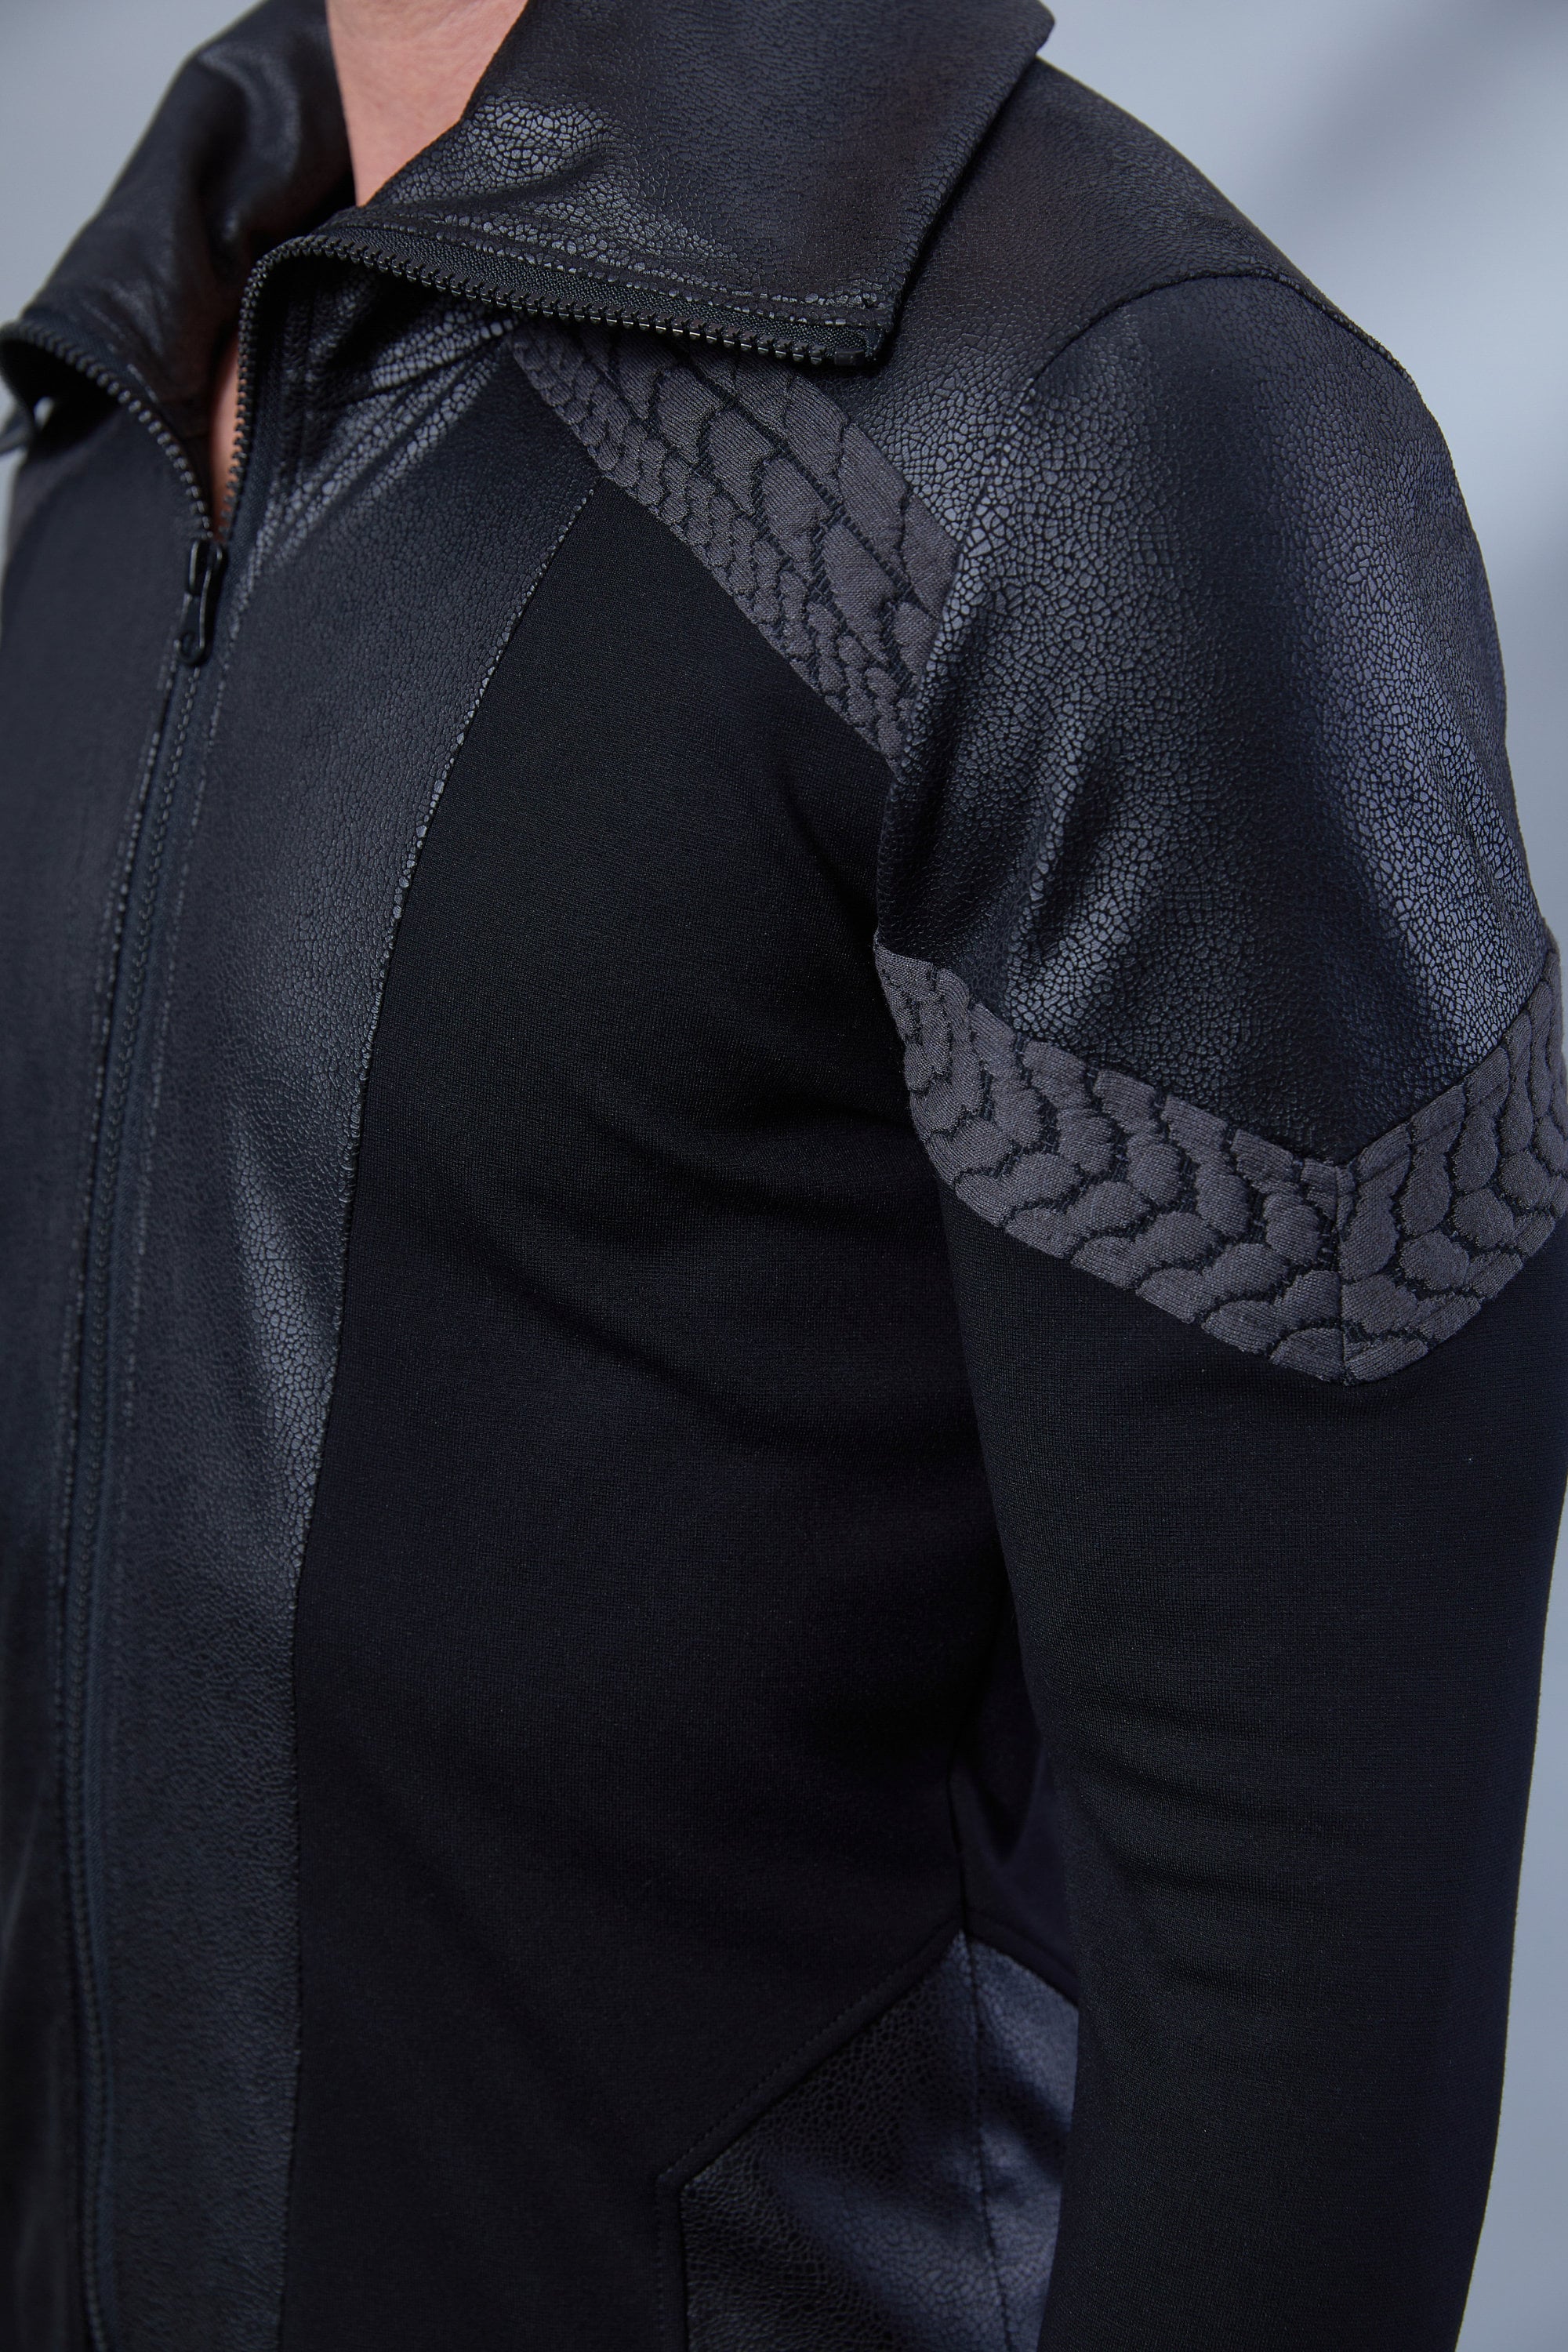 Futuristic Men's Jacket With High Collar Cyberpunk 